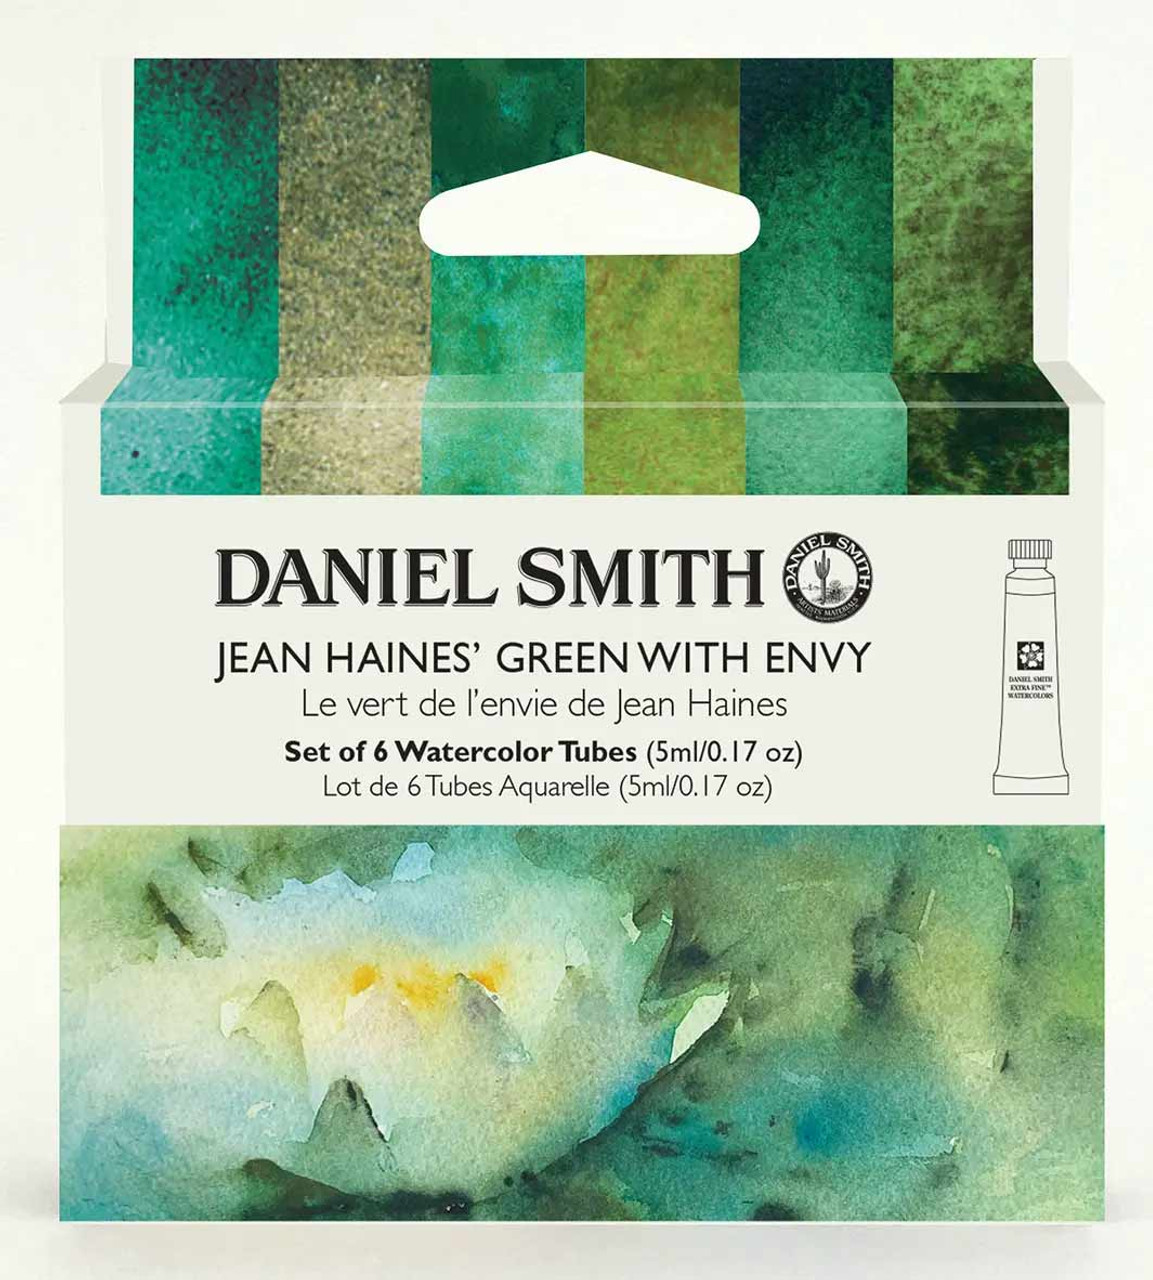 DANIEL SMITH Watercolor, 5ml tubes, Jean Haines Master Artist Set 10  Watercolor